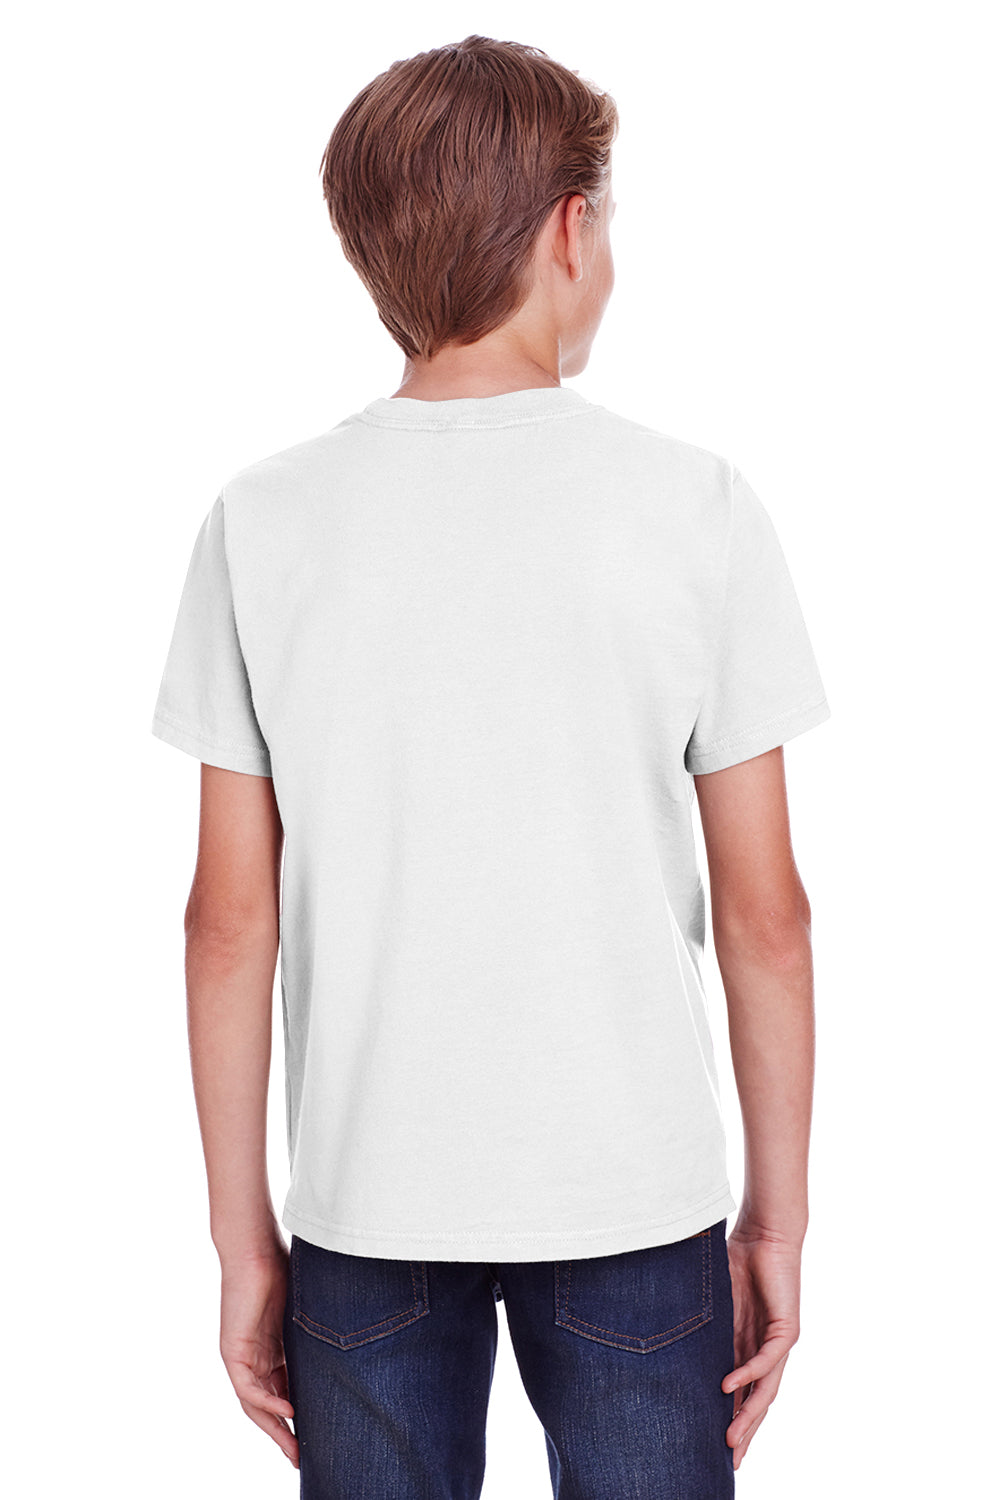 ComfortWash by Hanes GDH175 Youth Short Sleeve Crewneck T-Shirt White Back